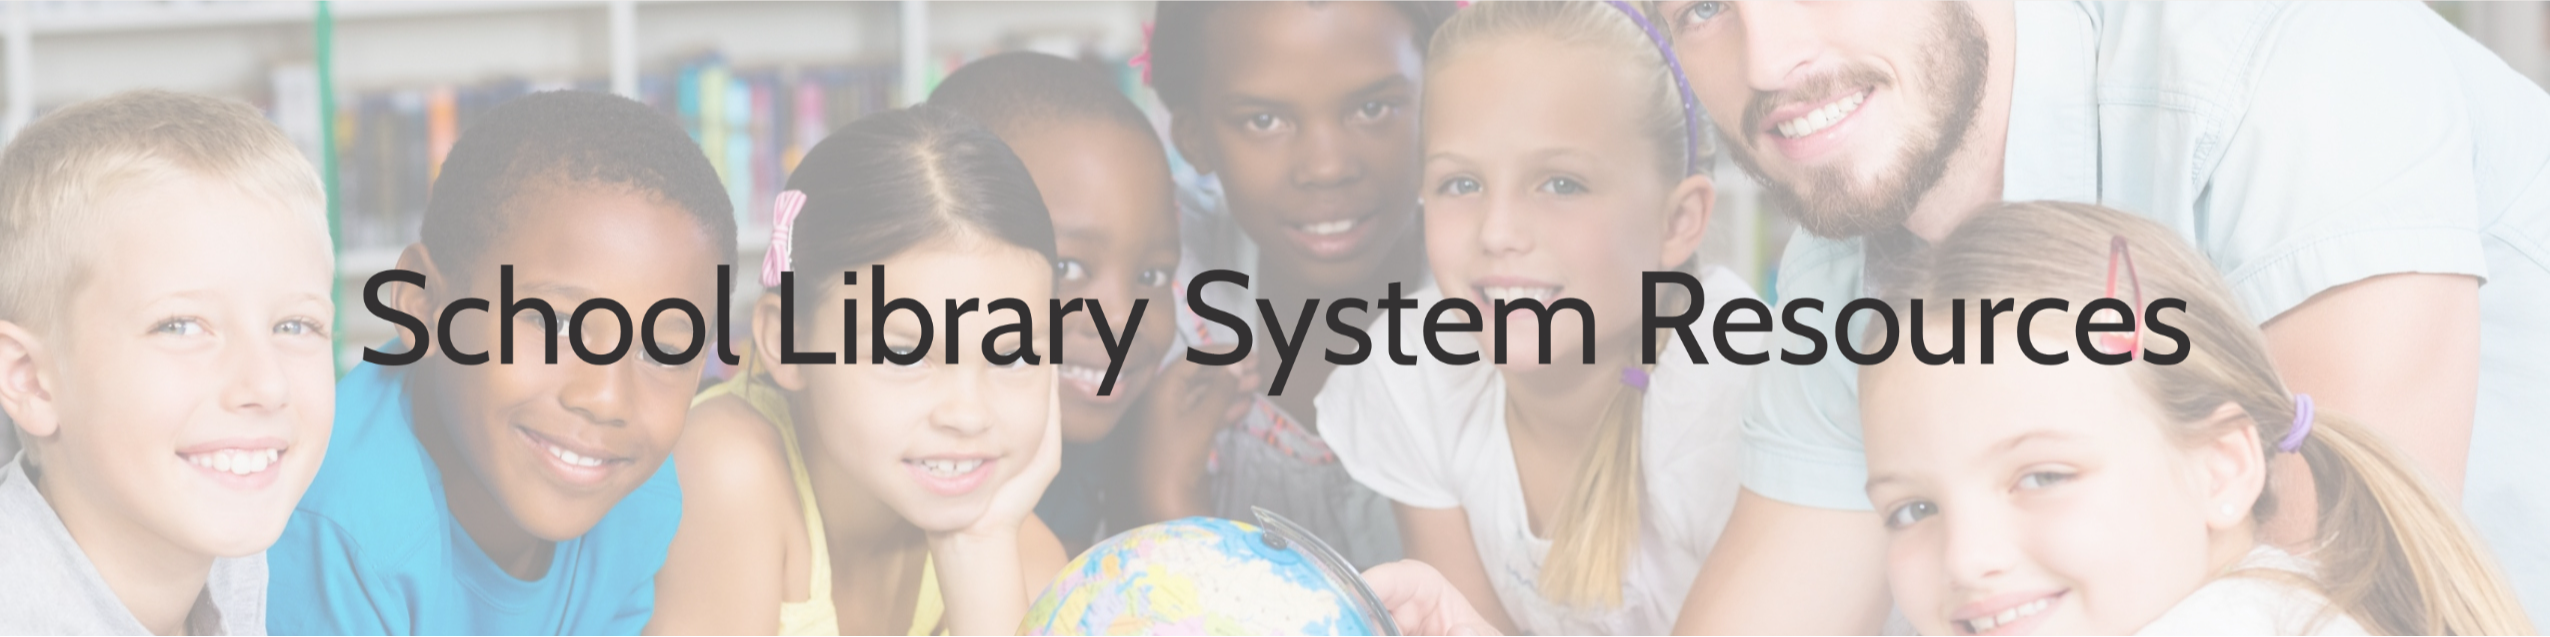 School Library Resources header